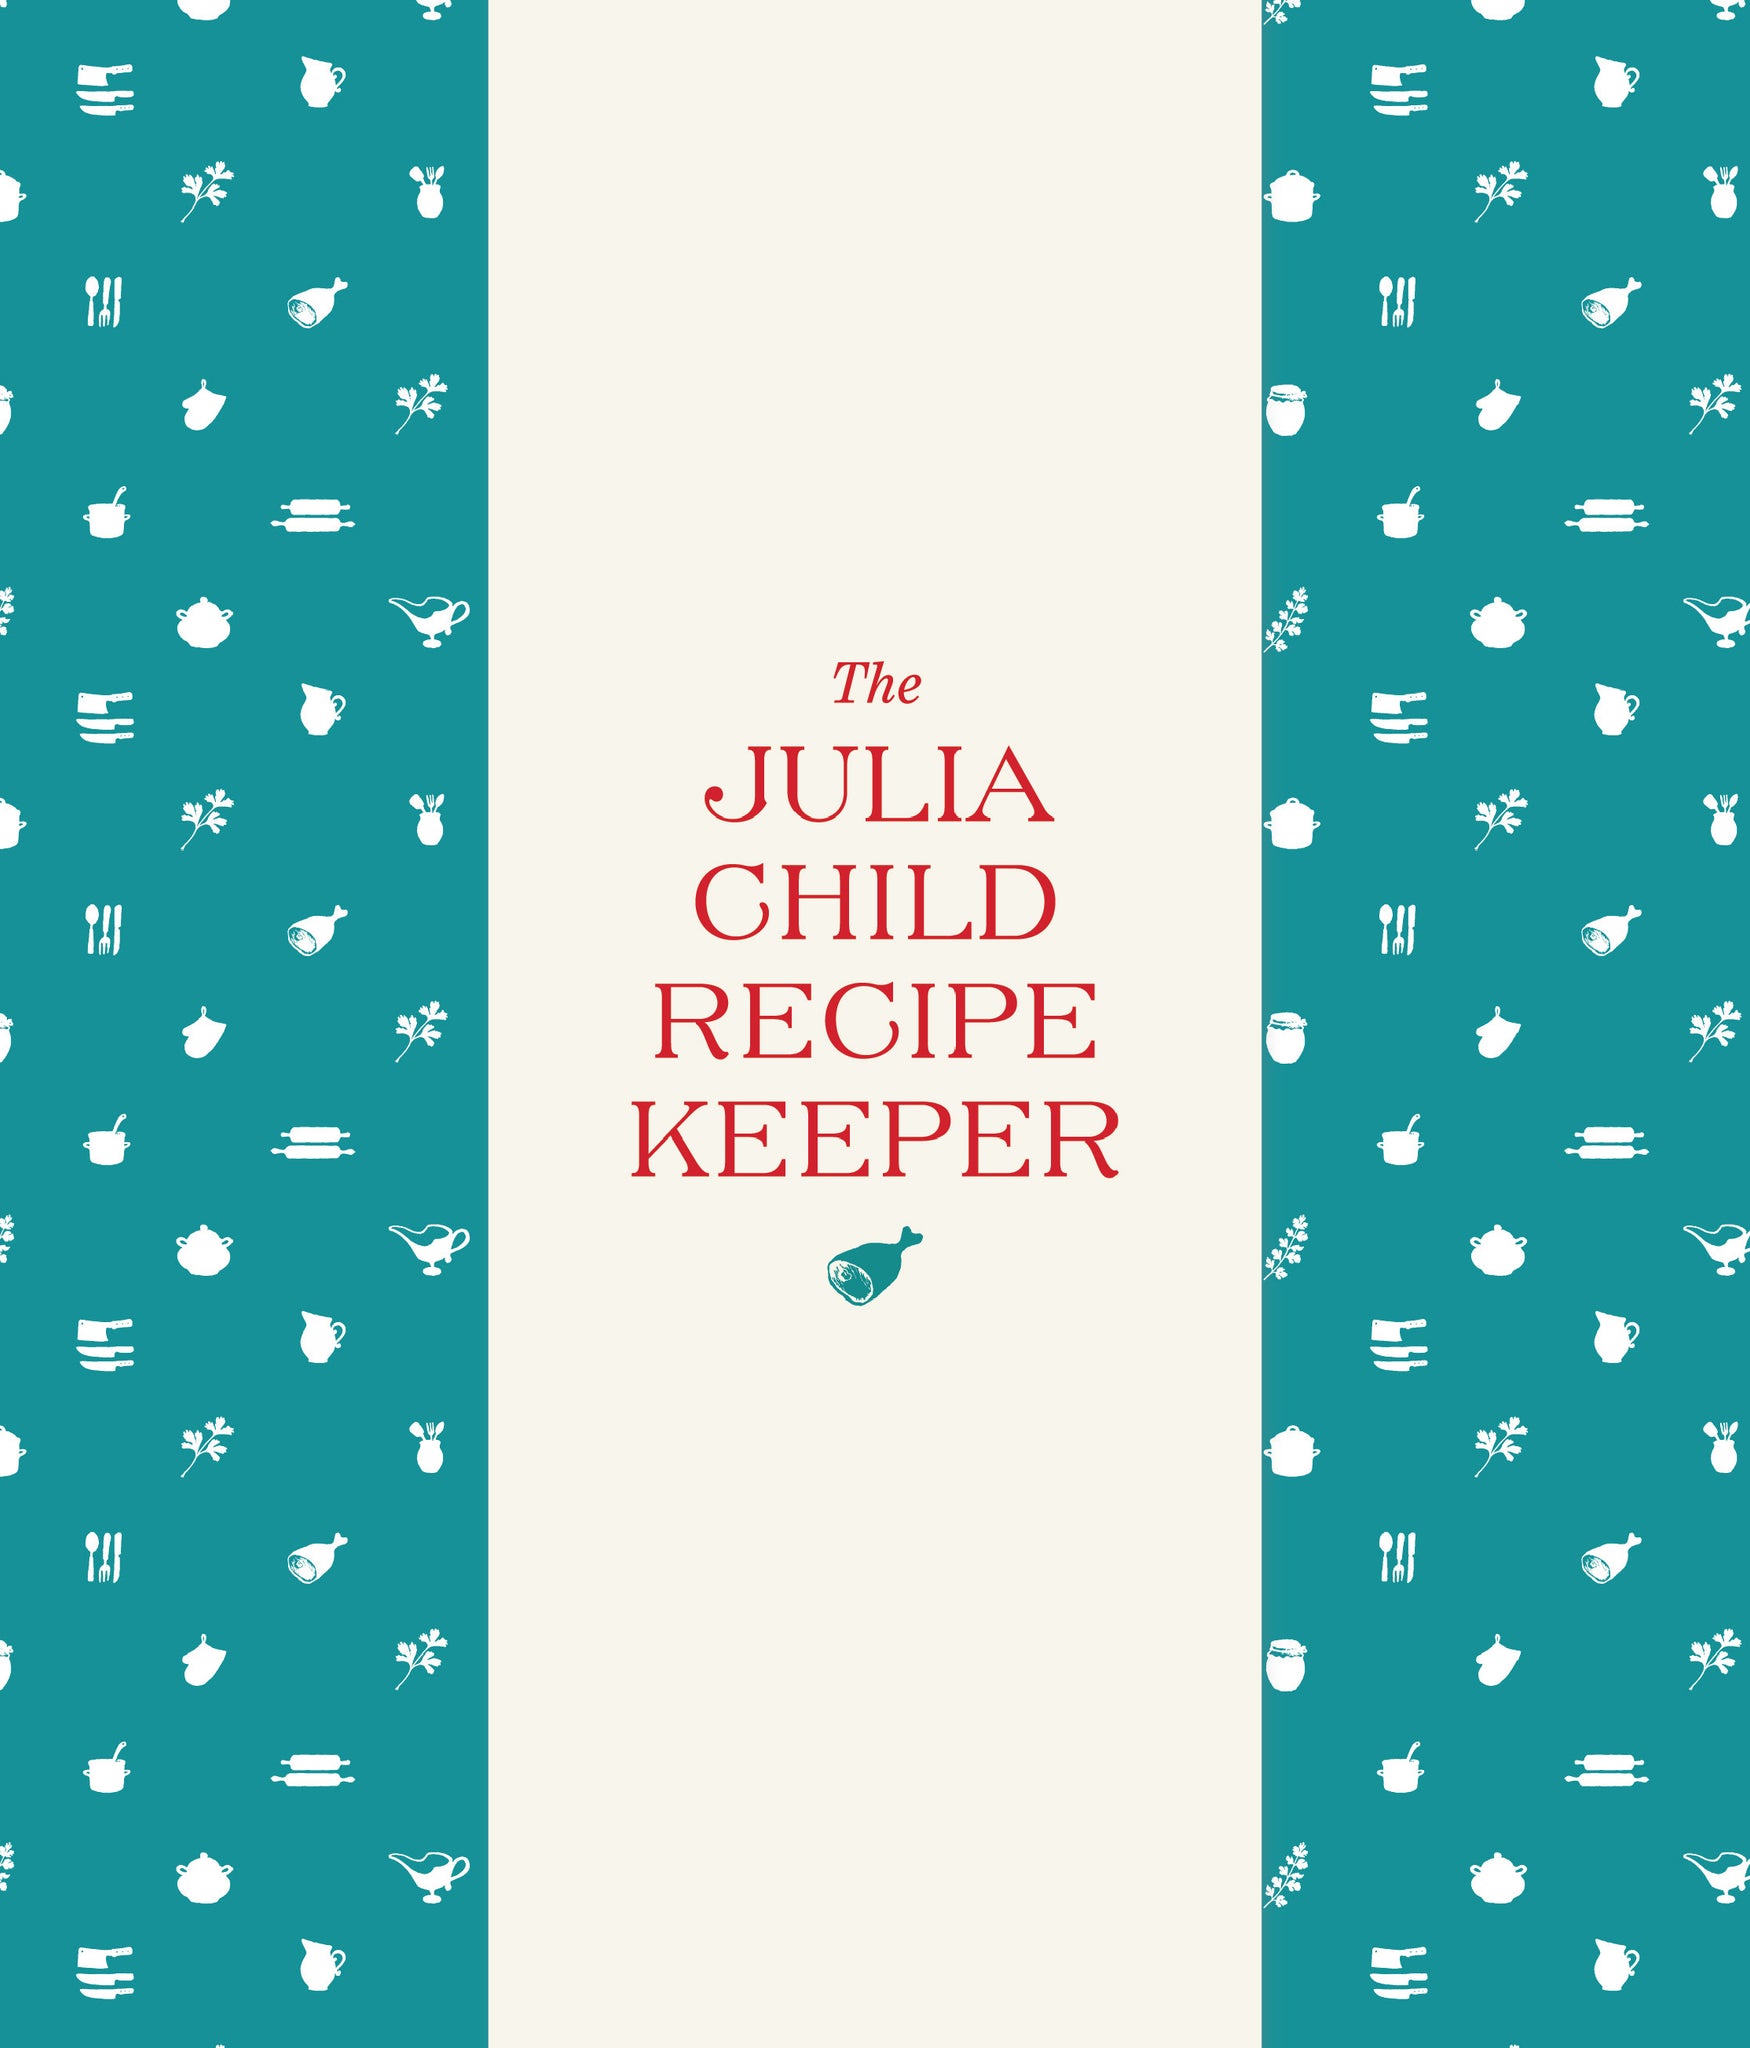 Julia Child Recipe Keeper, the cover